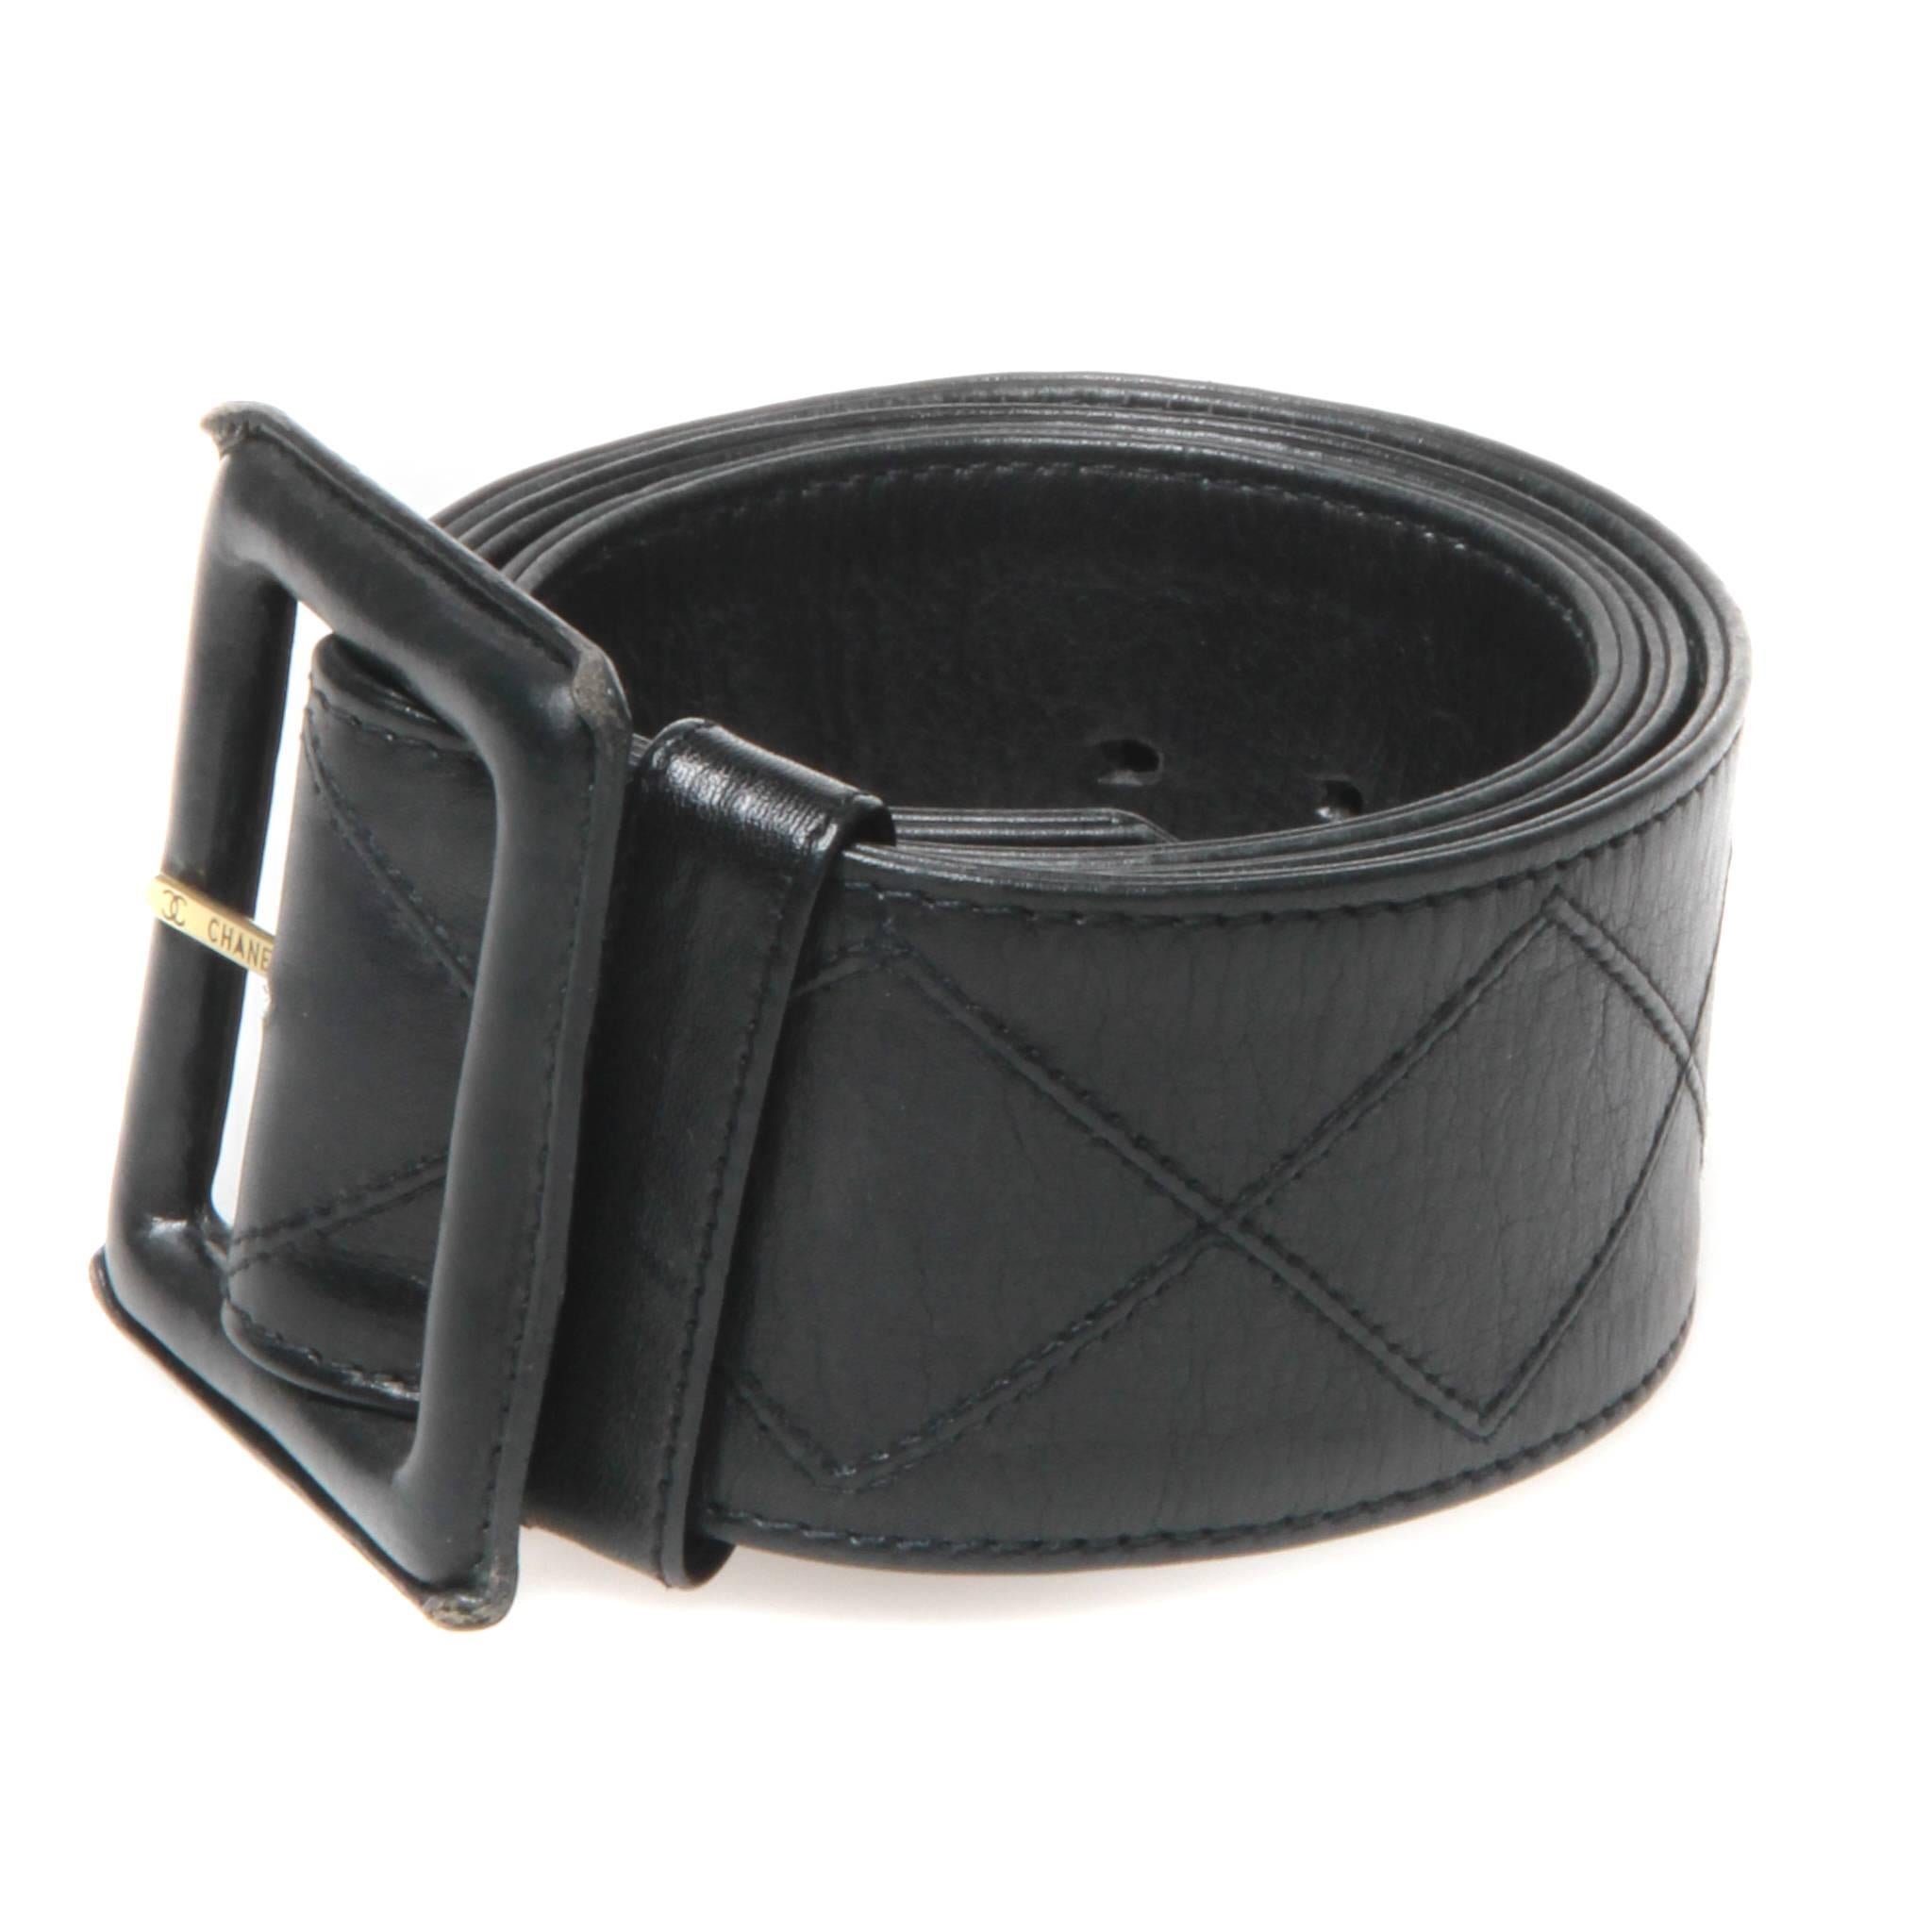 Chanel black leather belt size 80/32